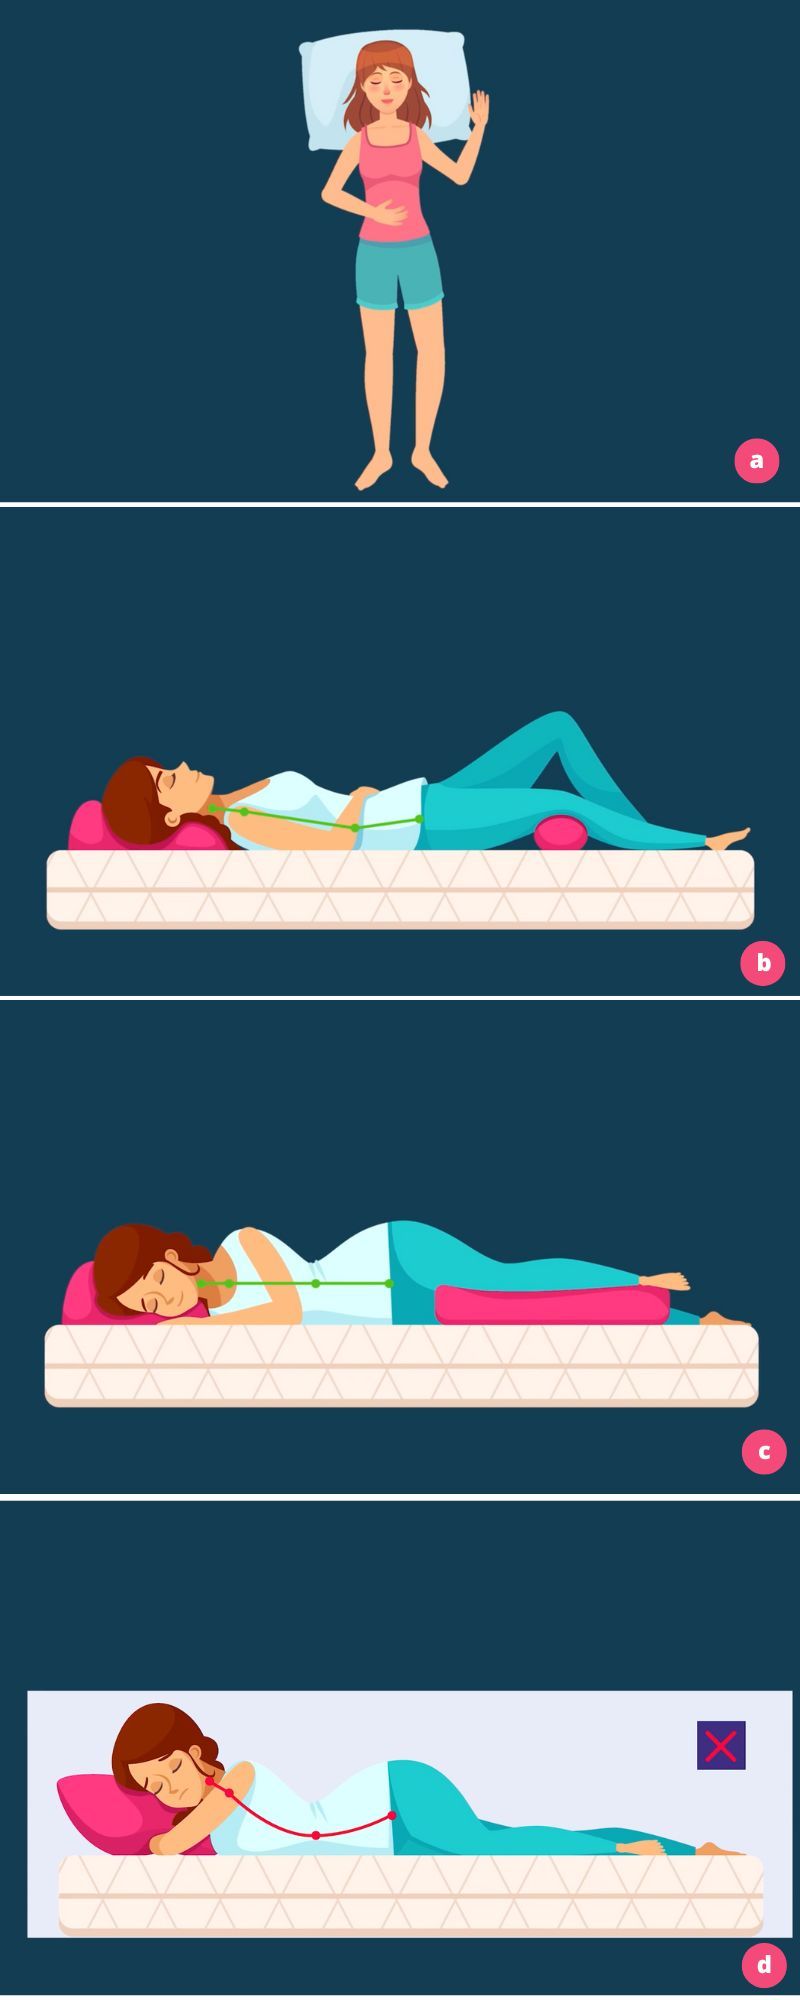 Tips on sleeping positions